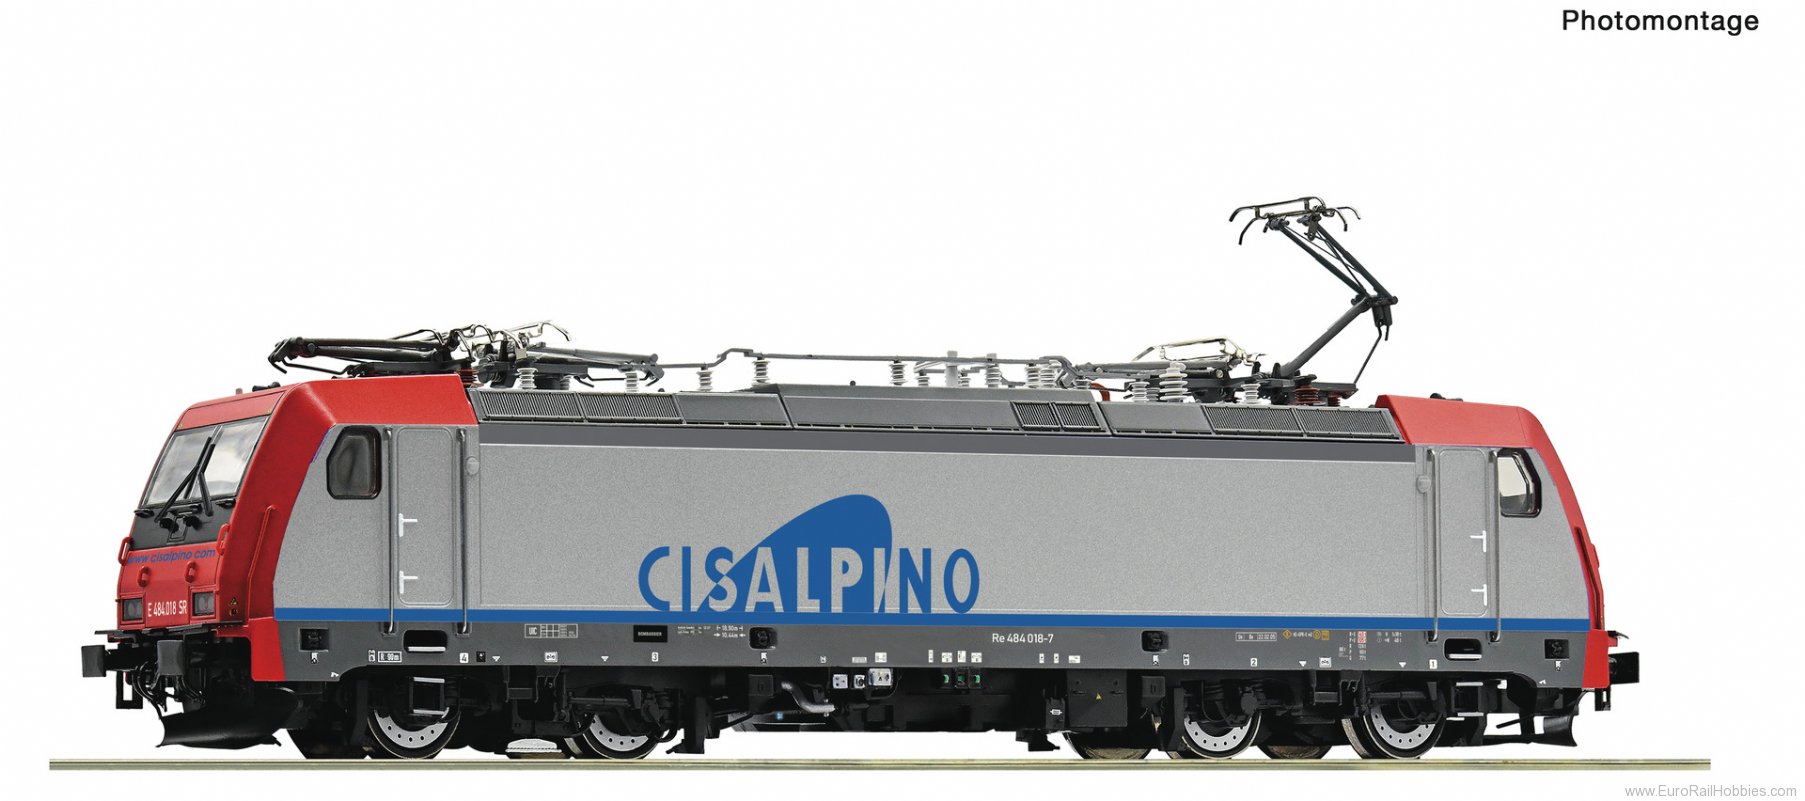 Roco 7520031 Electric locomotive Re 484 018-7, Cisalpino (